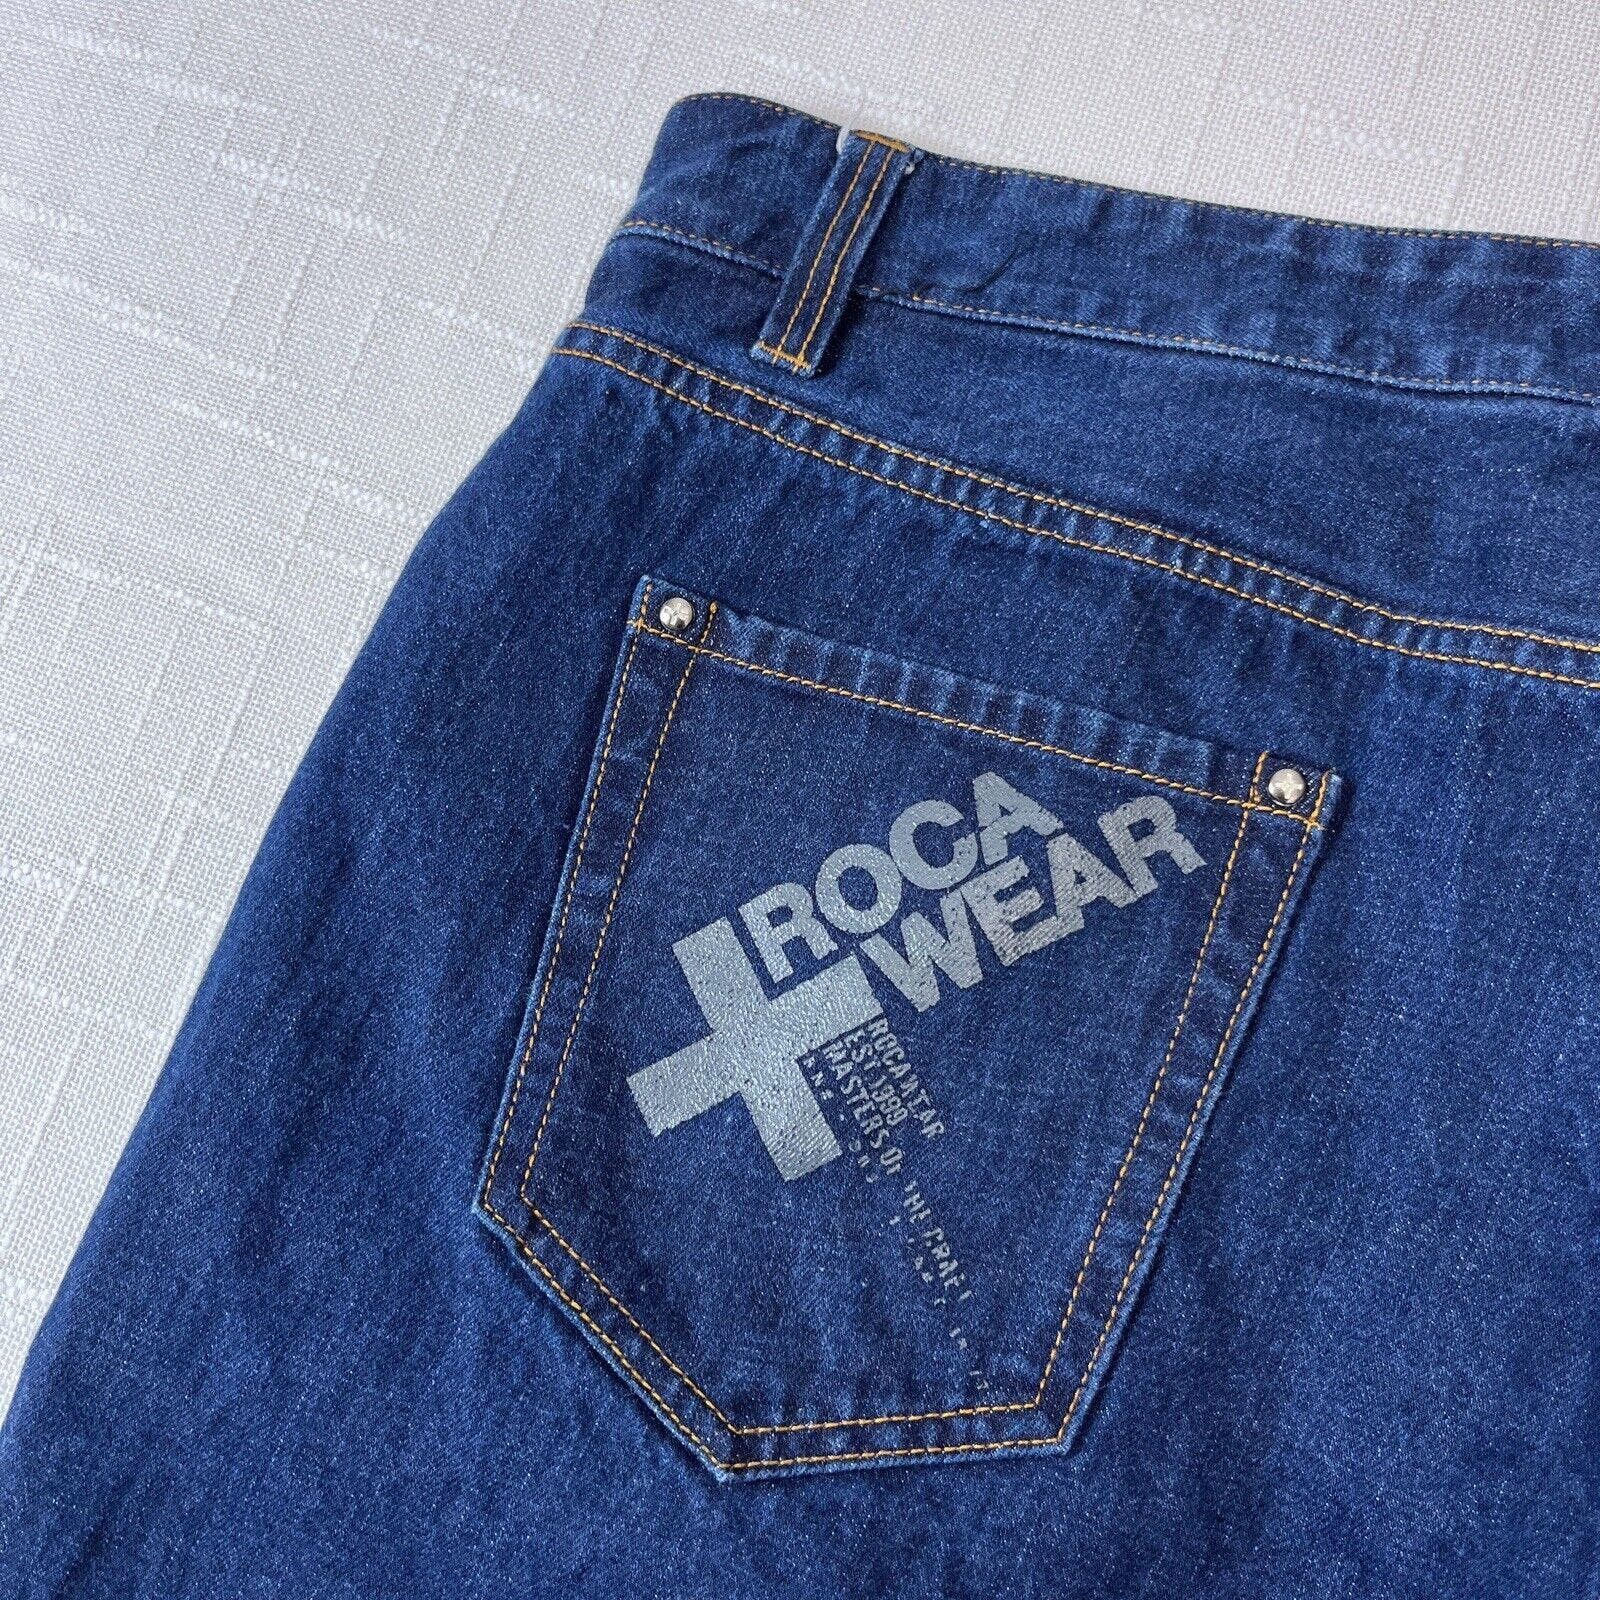 Vintage Y2K Rocawear Jean Shorts 45x13 Baggy Long Cyber Grunge Skate Size US 44 / EU 60 - 7 Thumbnail